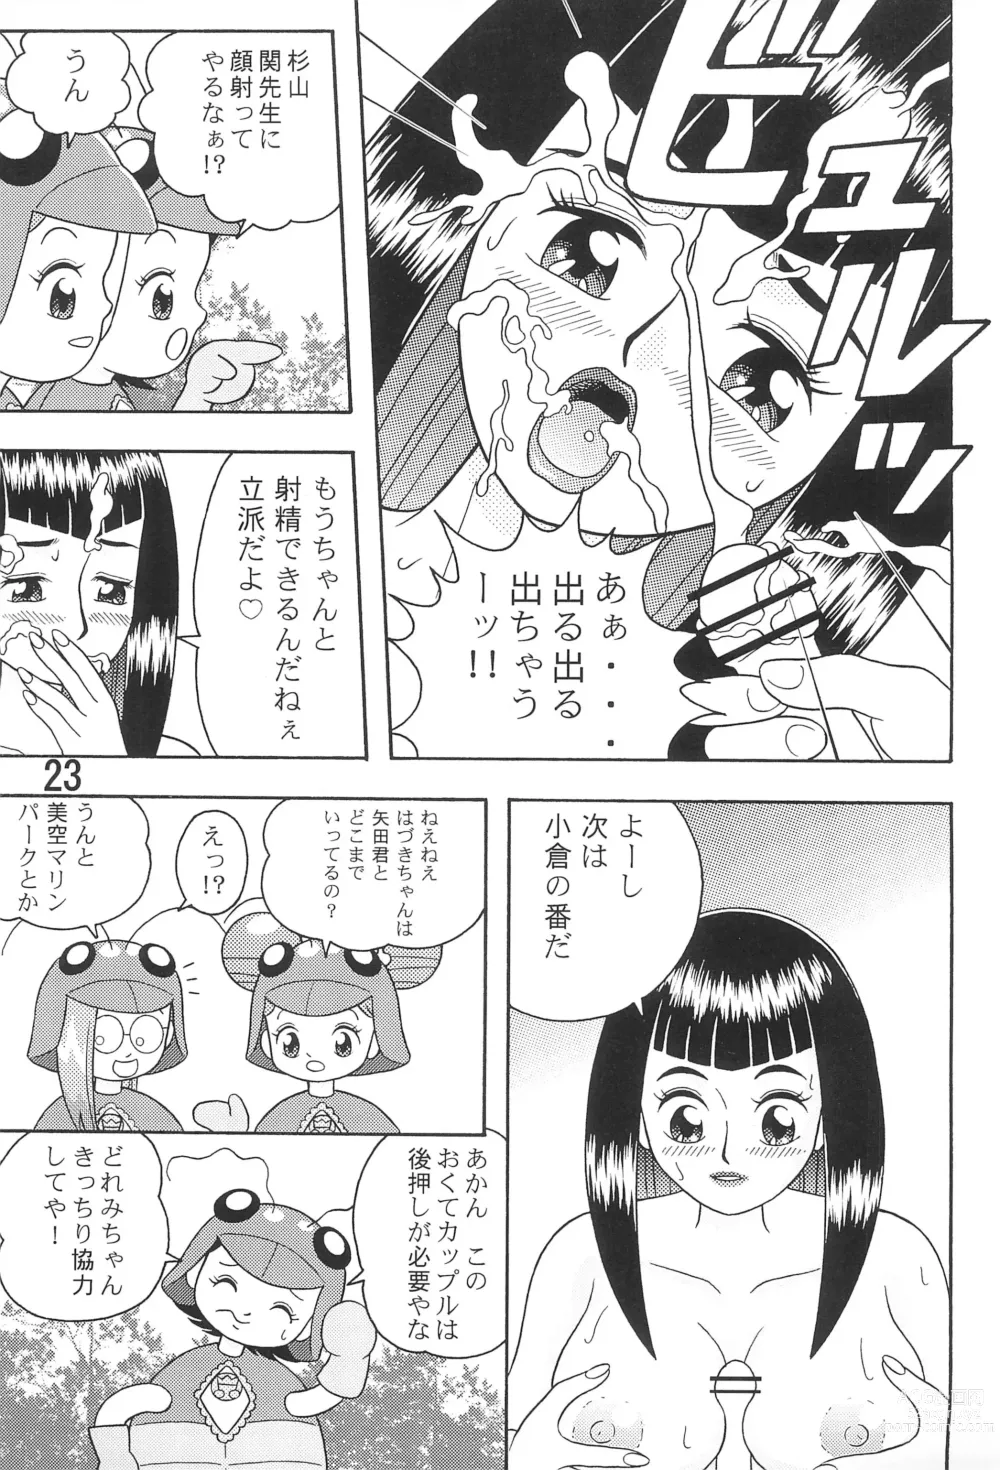 Page 25 of doujinshi 5 Nen 1 Kumi Mahougumi 2